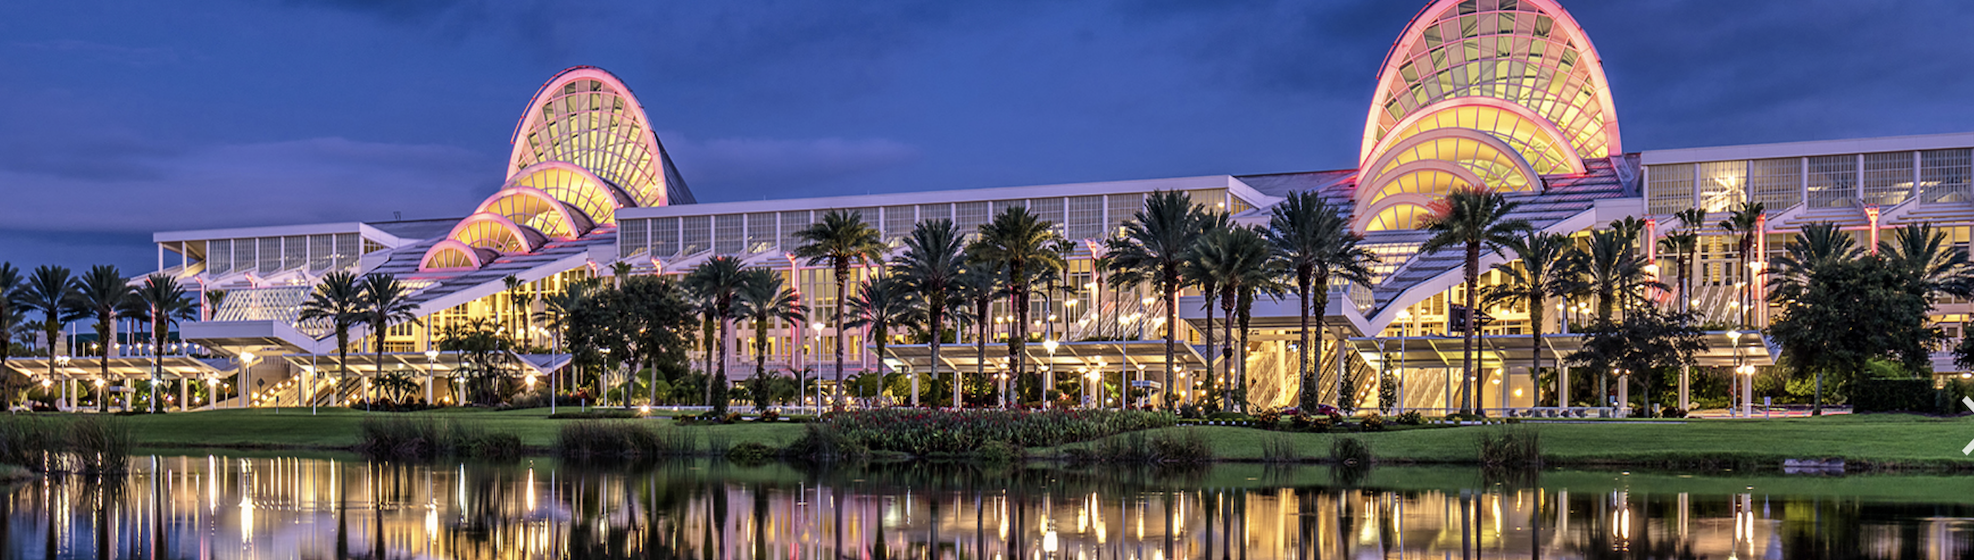 Orlando's Orange County Convention Center